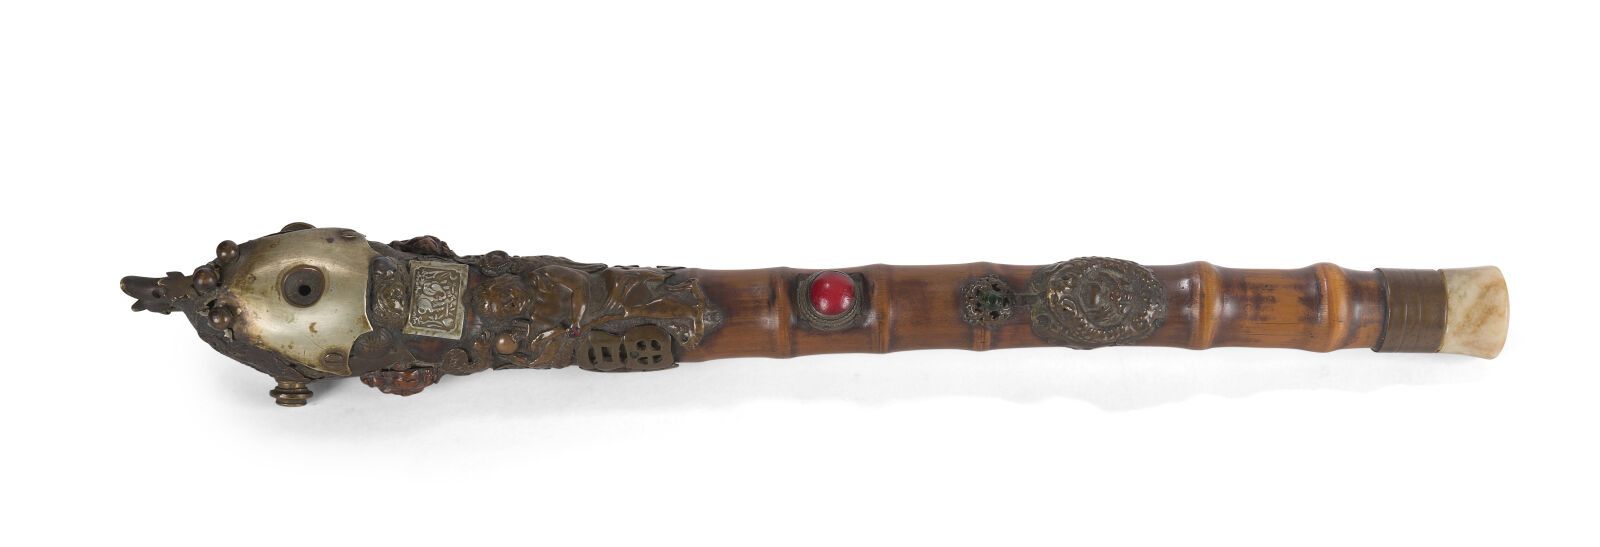 Null 竹、铜、石镶嵌的鸦片烟斗 
中国，20世纪初
一端装饰有基督教的图案，轴上有一只蟾蜍
长度：38厘米